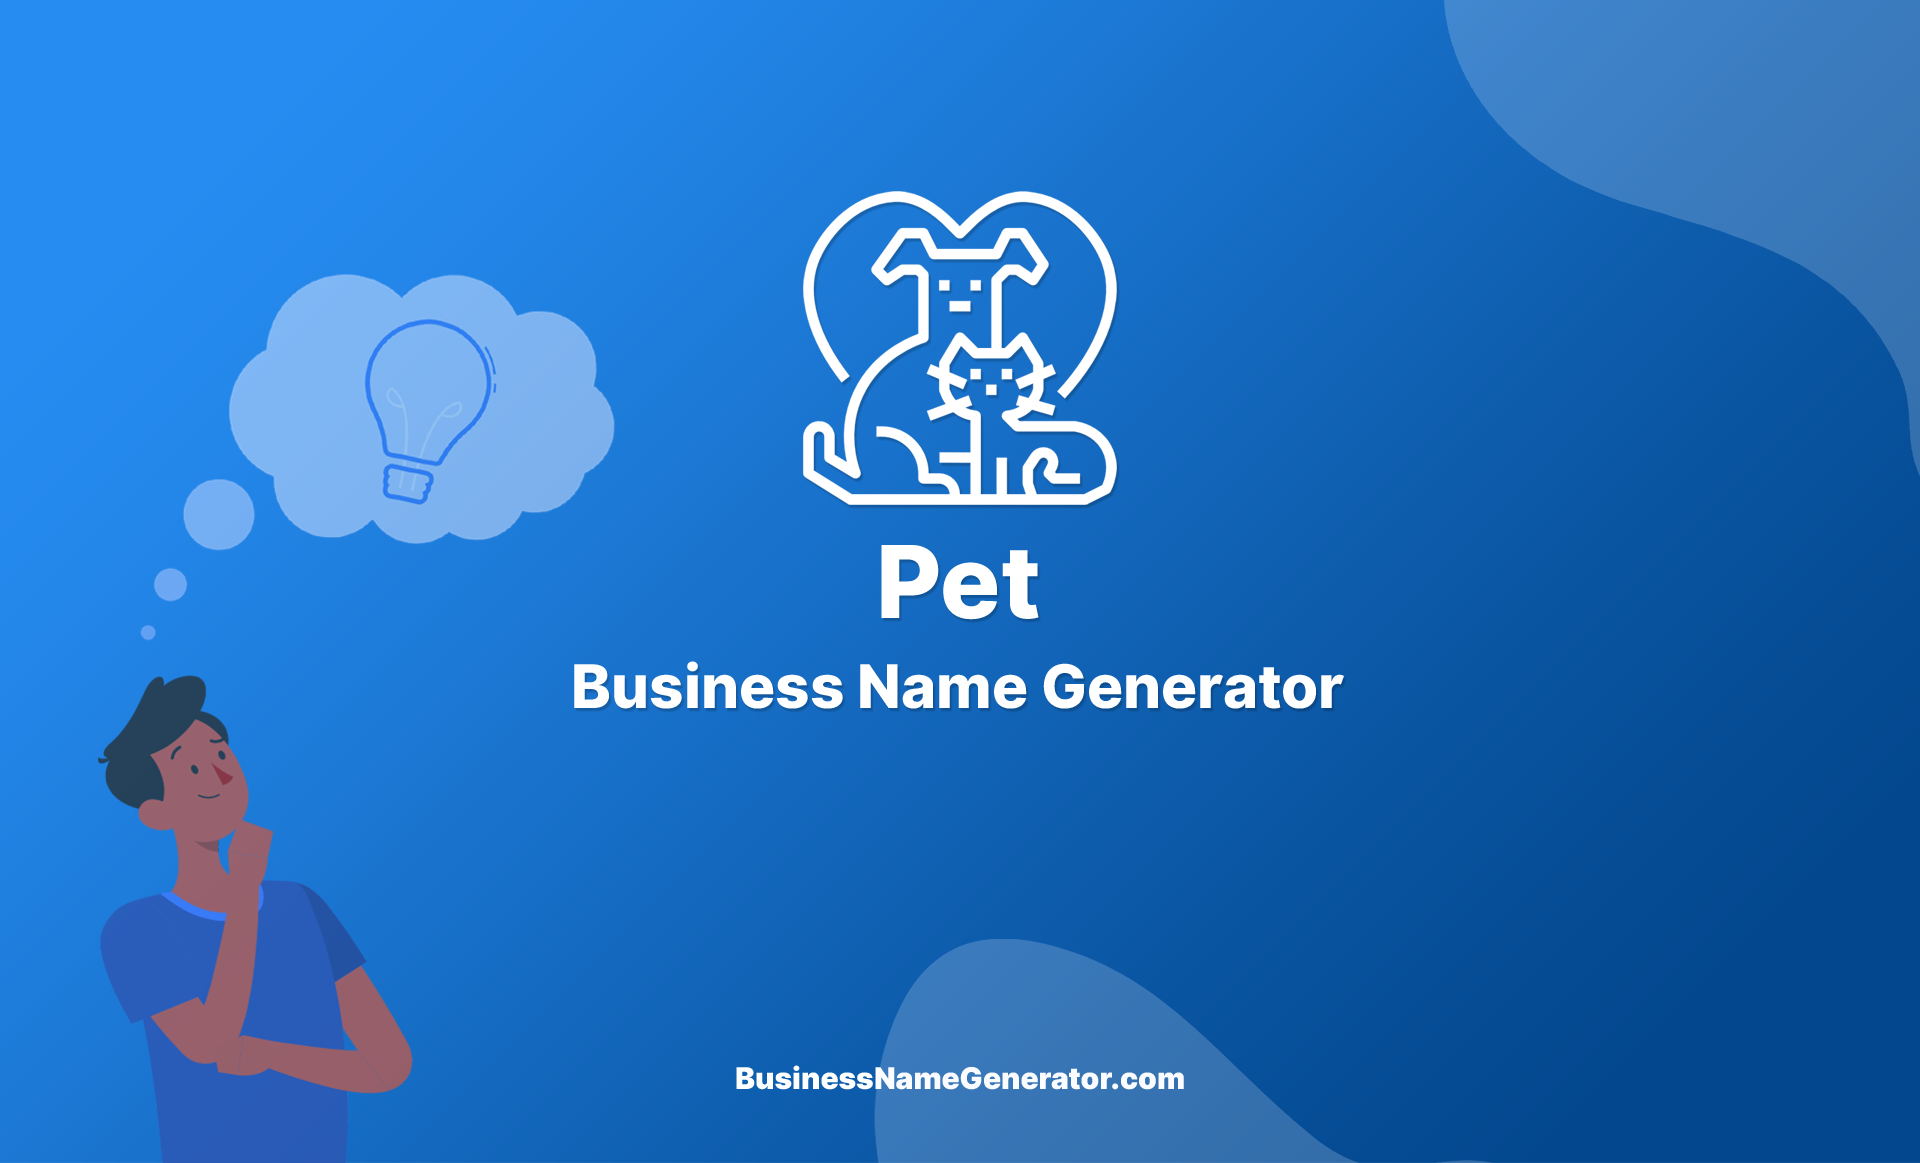 300 Pet Business Name Ideas + FREE Generator Tool